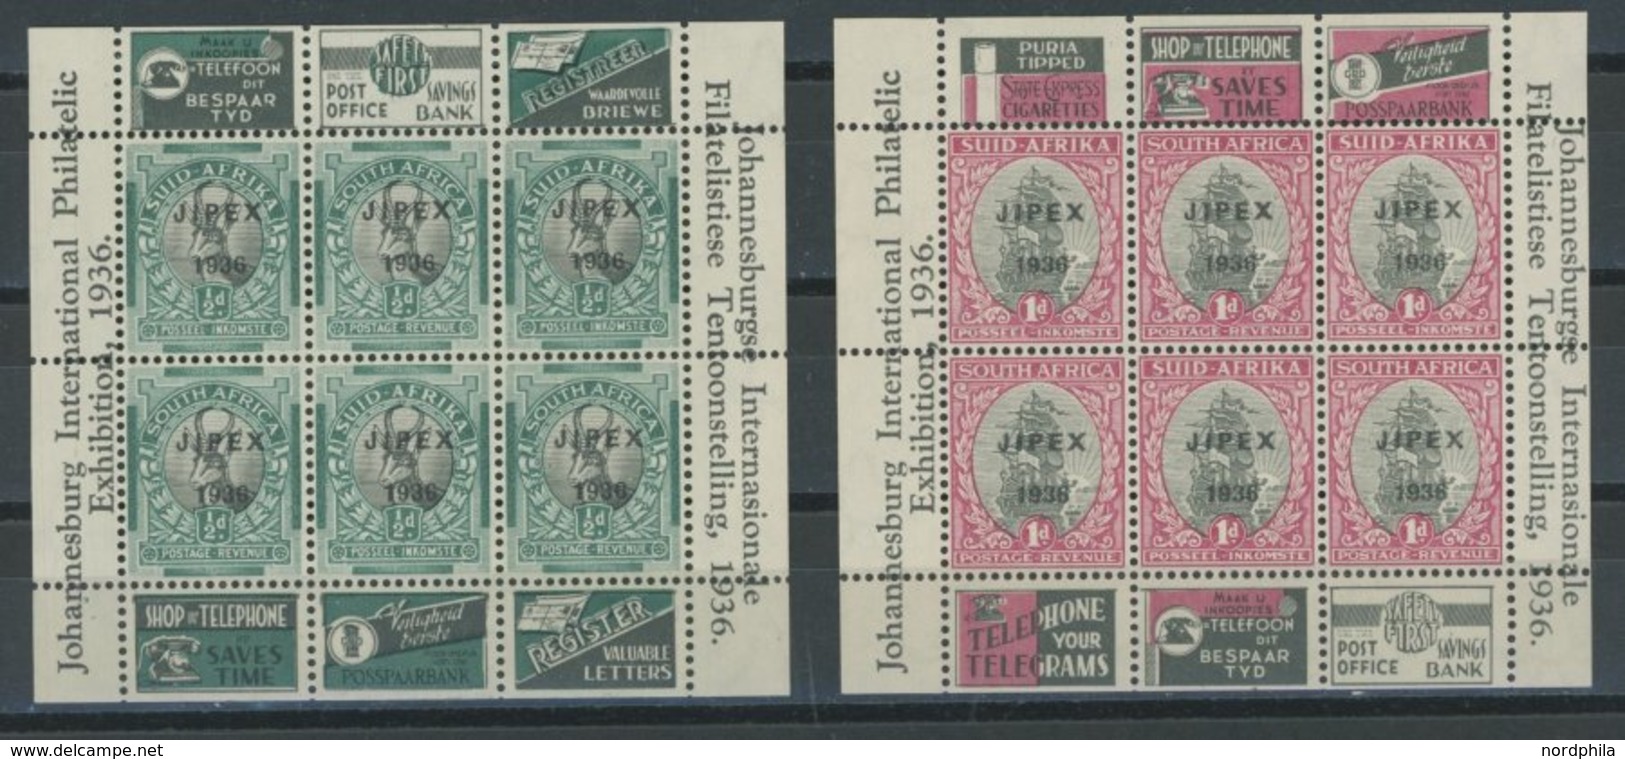 SÜDAFRIKA AB 1910 Bl. 1/2 **, 1936, Blockpaar JIPEX 1936, Postfrisch, Pracht - Blocks & Kleinbögen